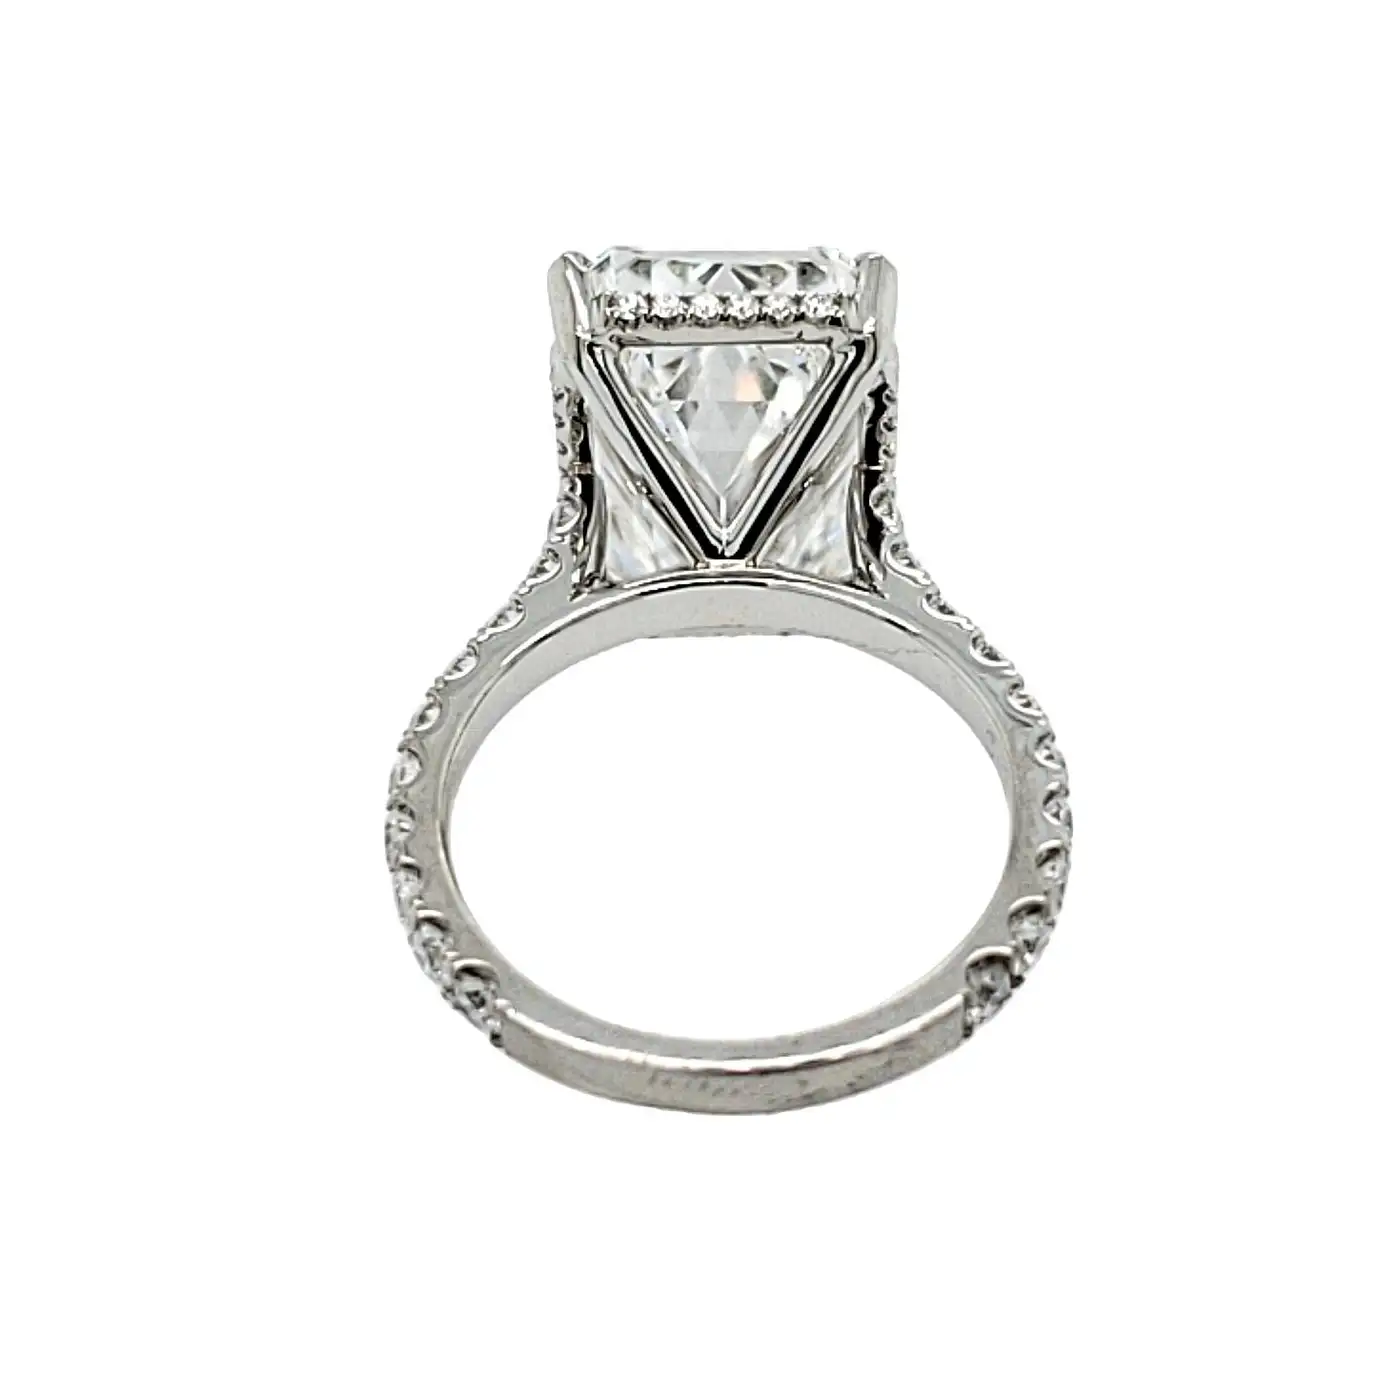 David-Rosenberg-10.41-Carat-Emerald-Cut-F-VVS2-GIA-Diamond-Engagement-Ring-7.webp